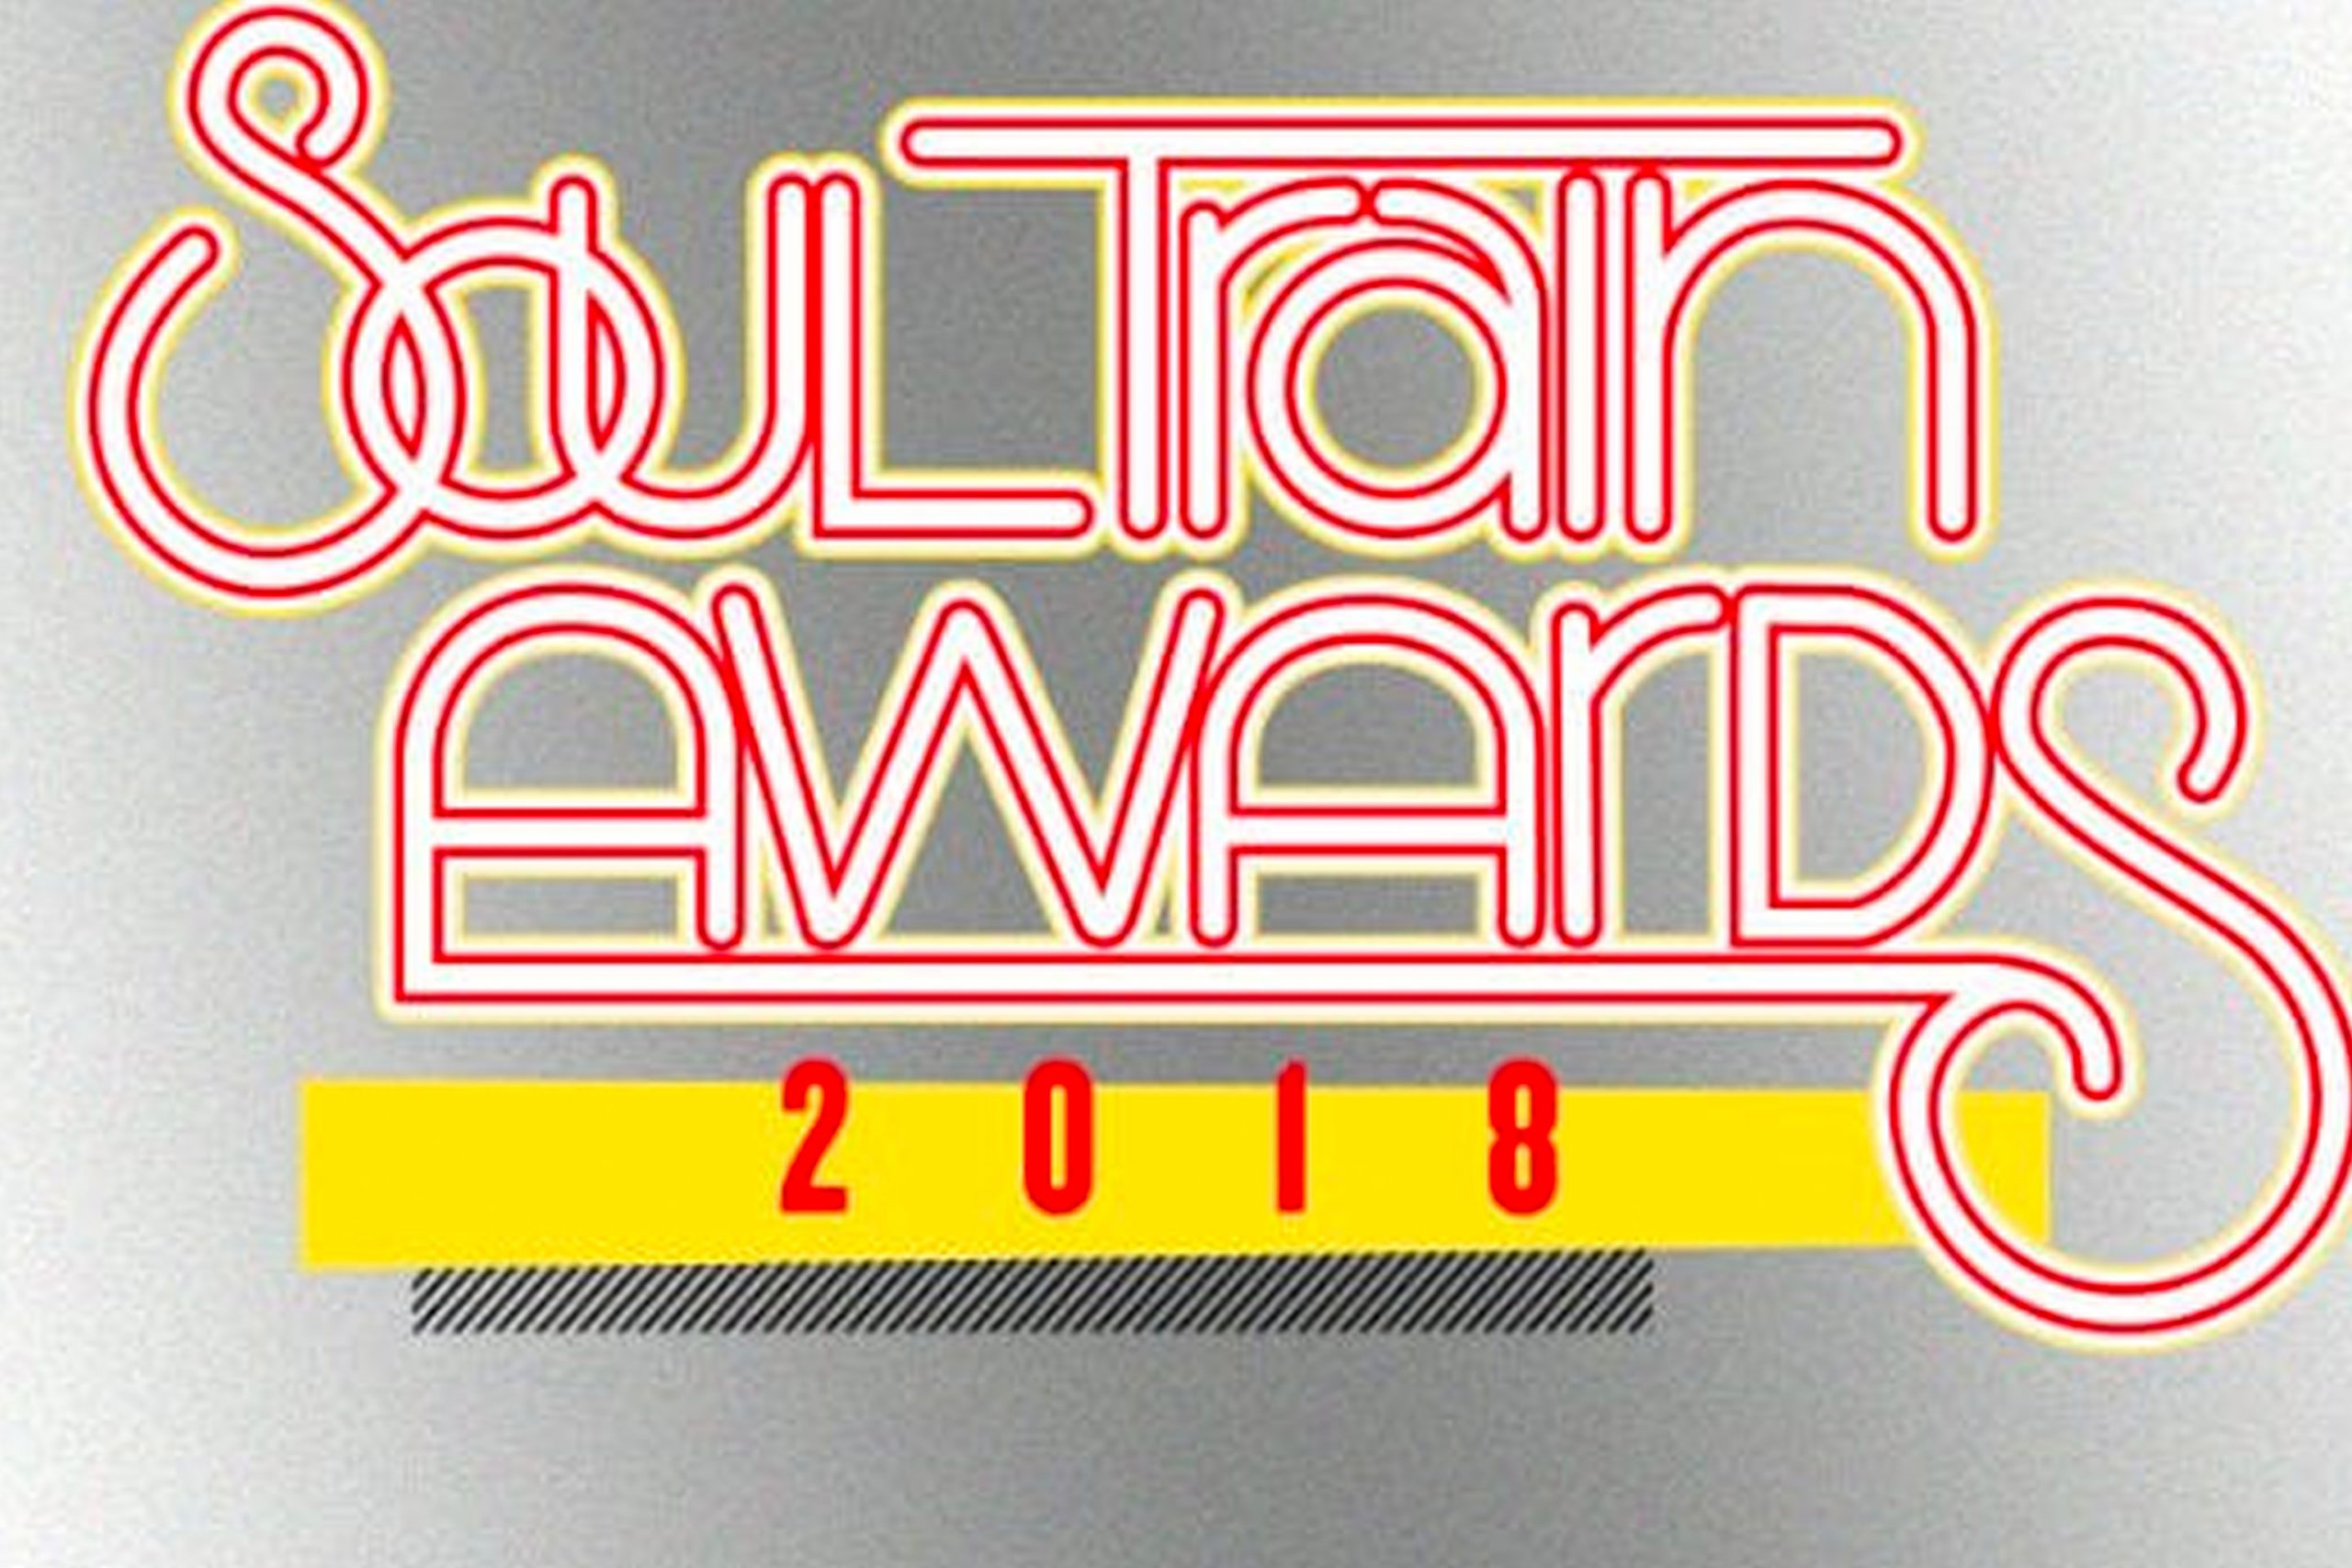 Soultrain awards 2018